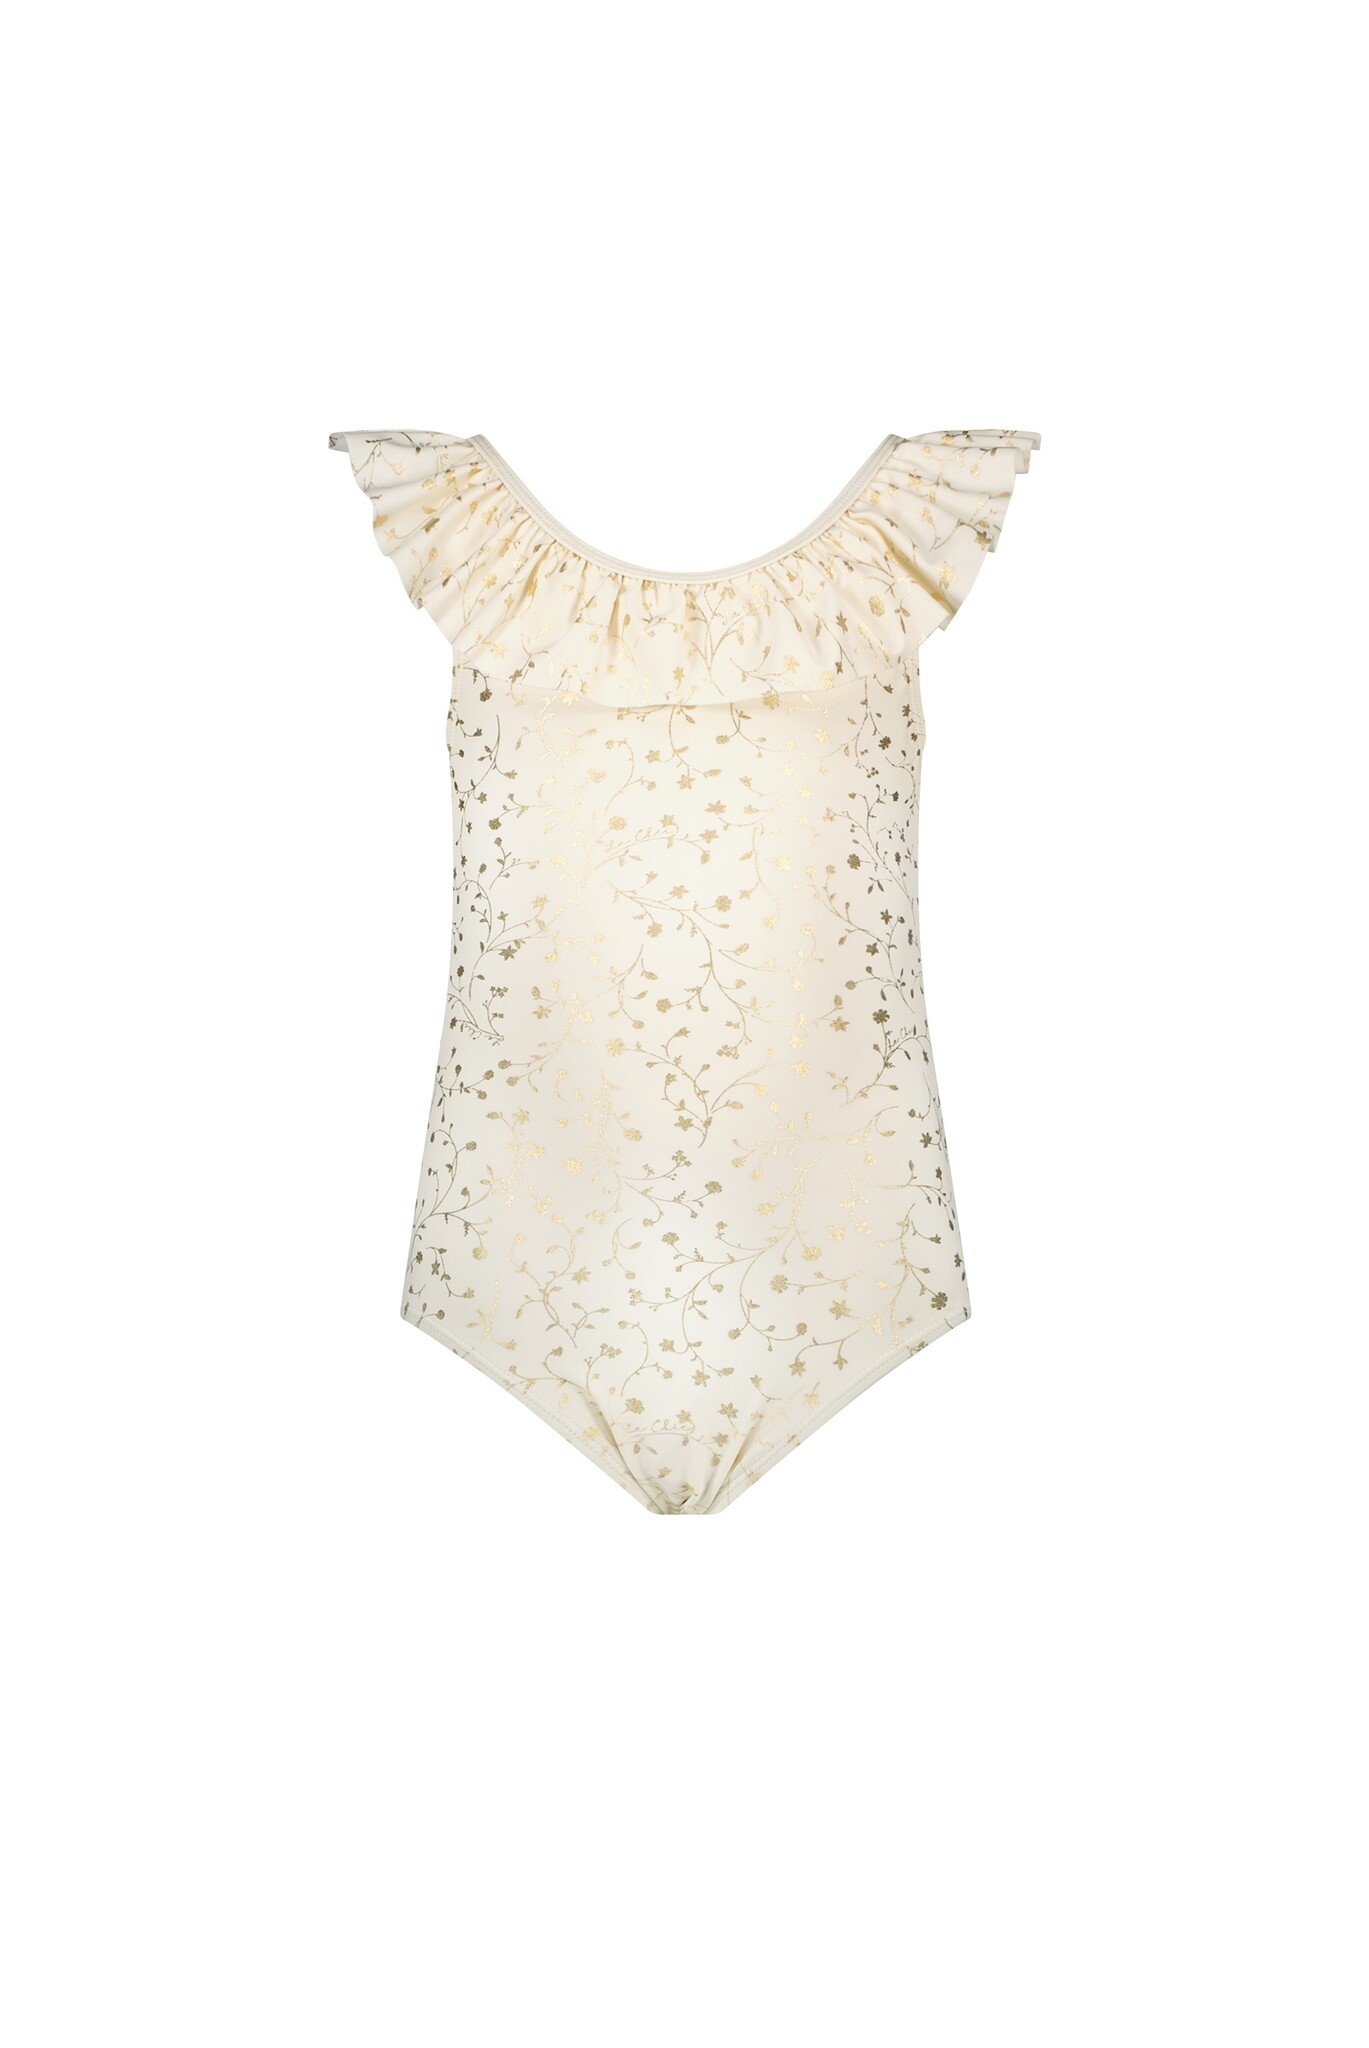 Le Chic C401-5051 Meisjes Jumpsuit - Pearled Ivory - Maat 110